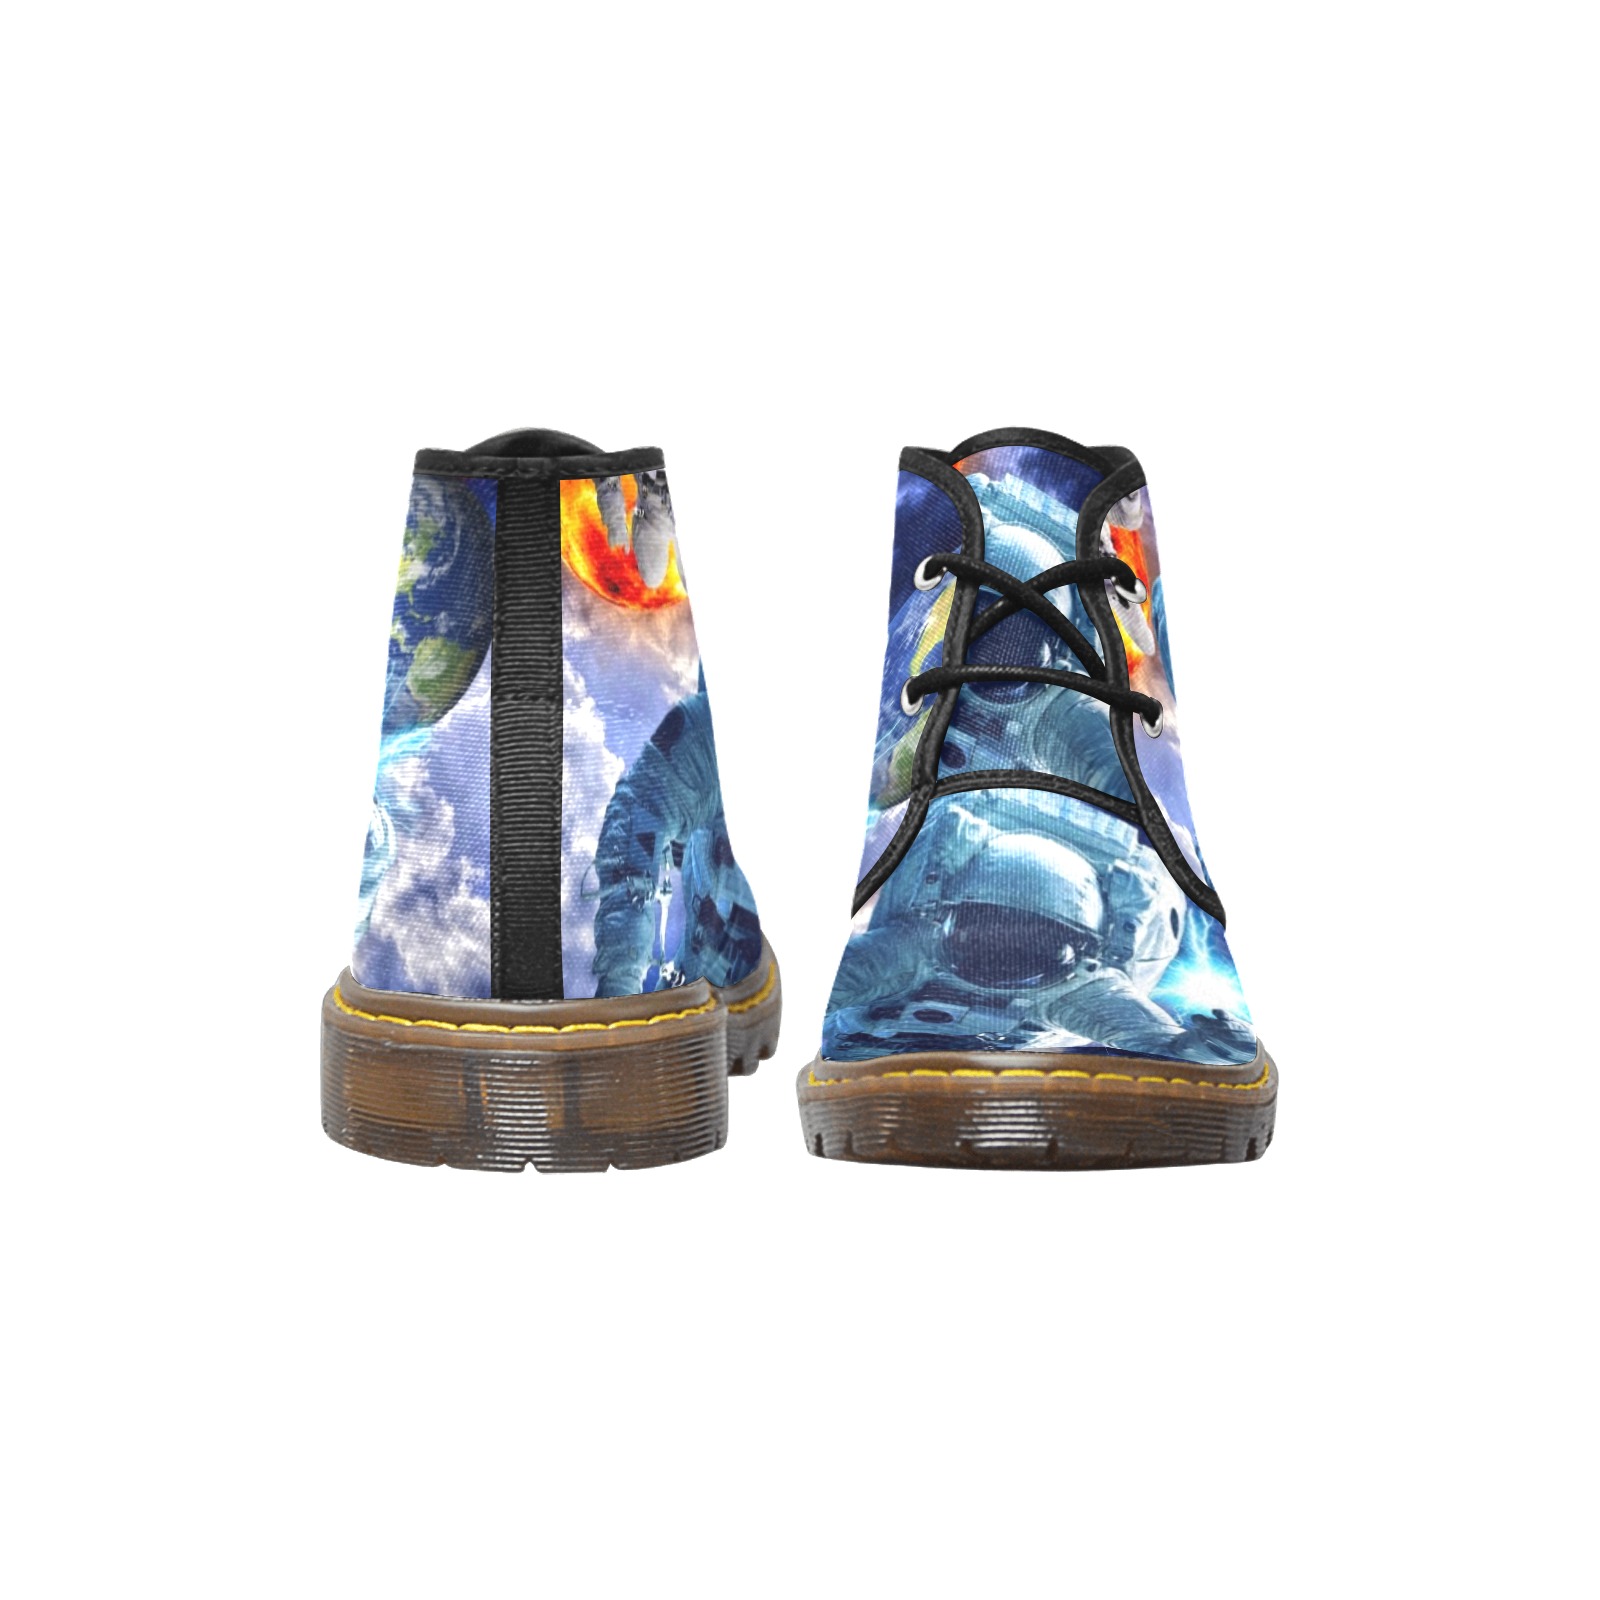 CLOUDS 9 ASTRONAUT Women's Canvas Chukka Boots (Model 2402-1)